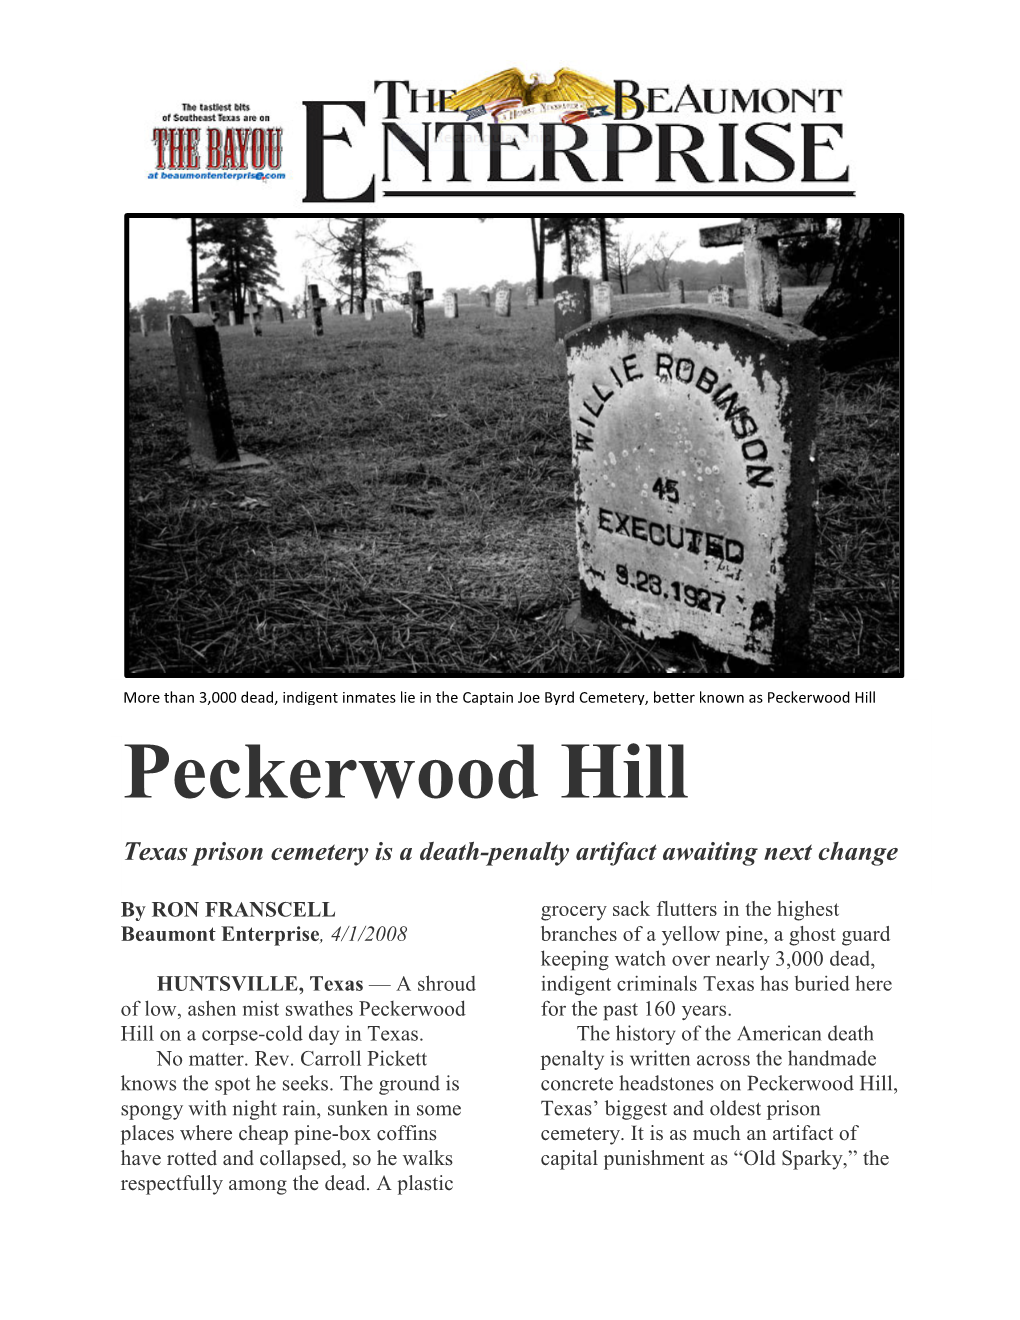 Peckerwood Hill